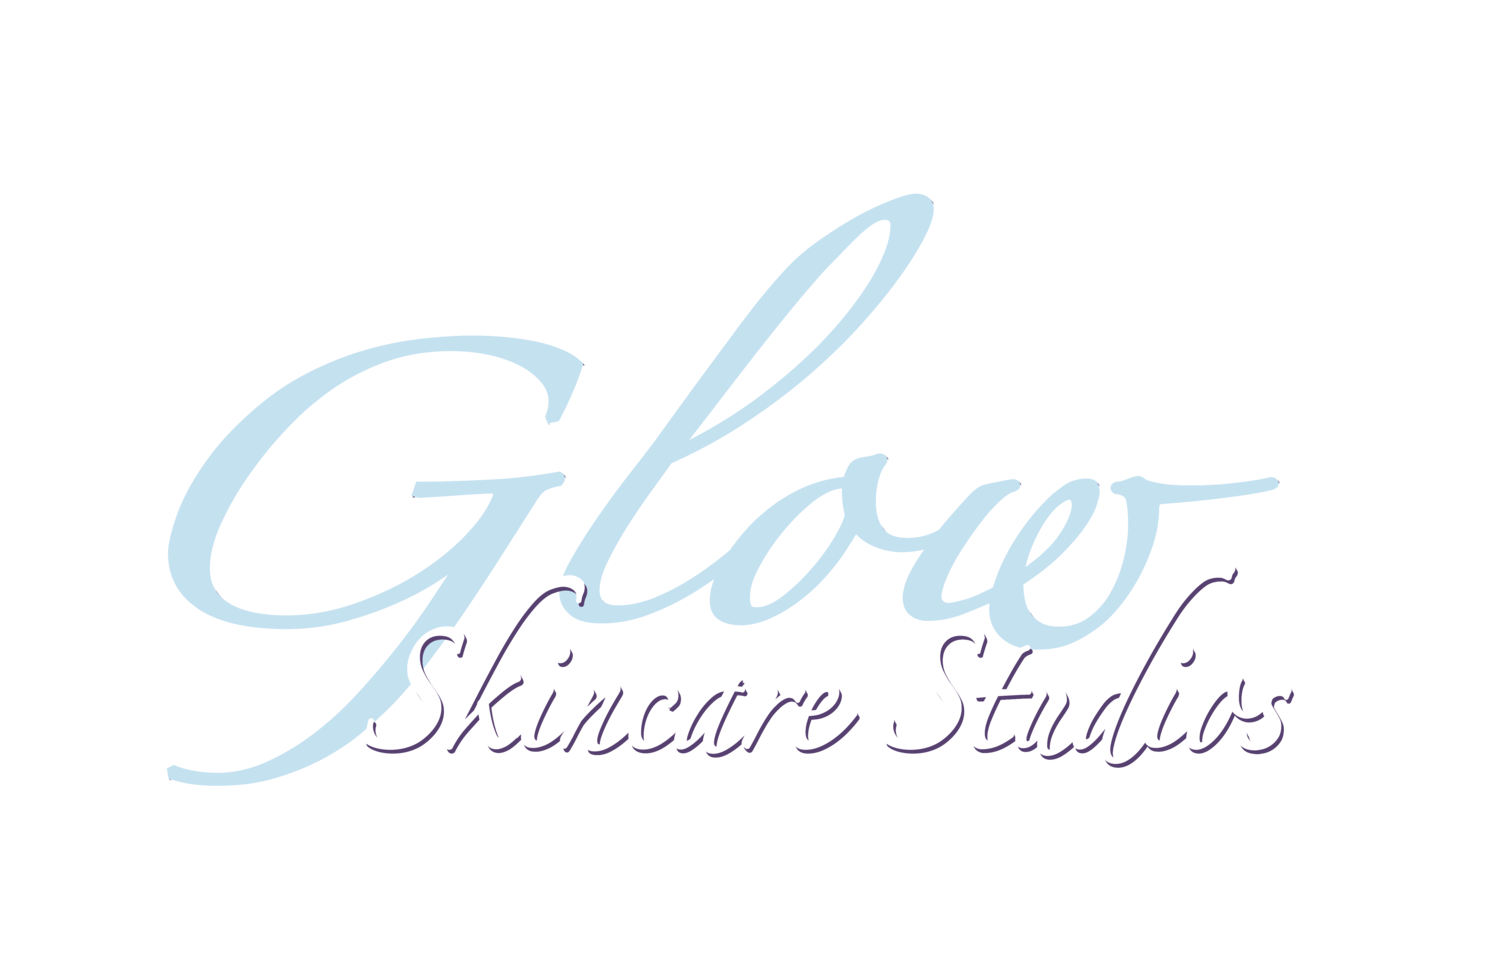 Glow Skincare Studios